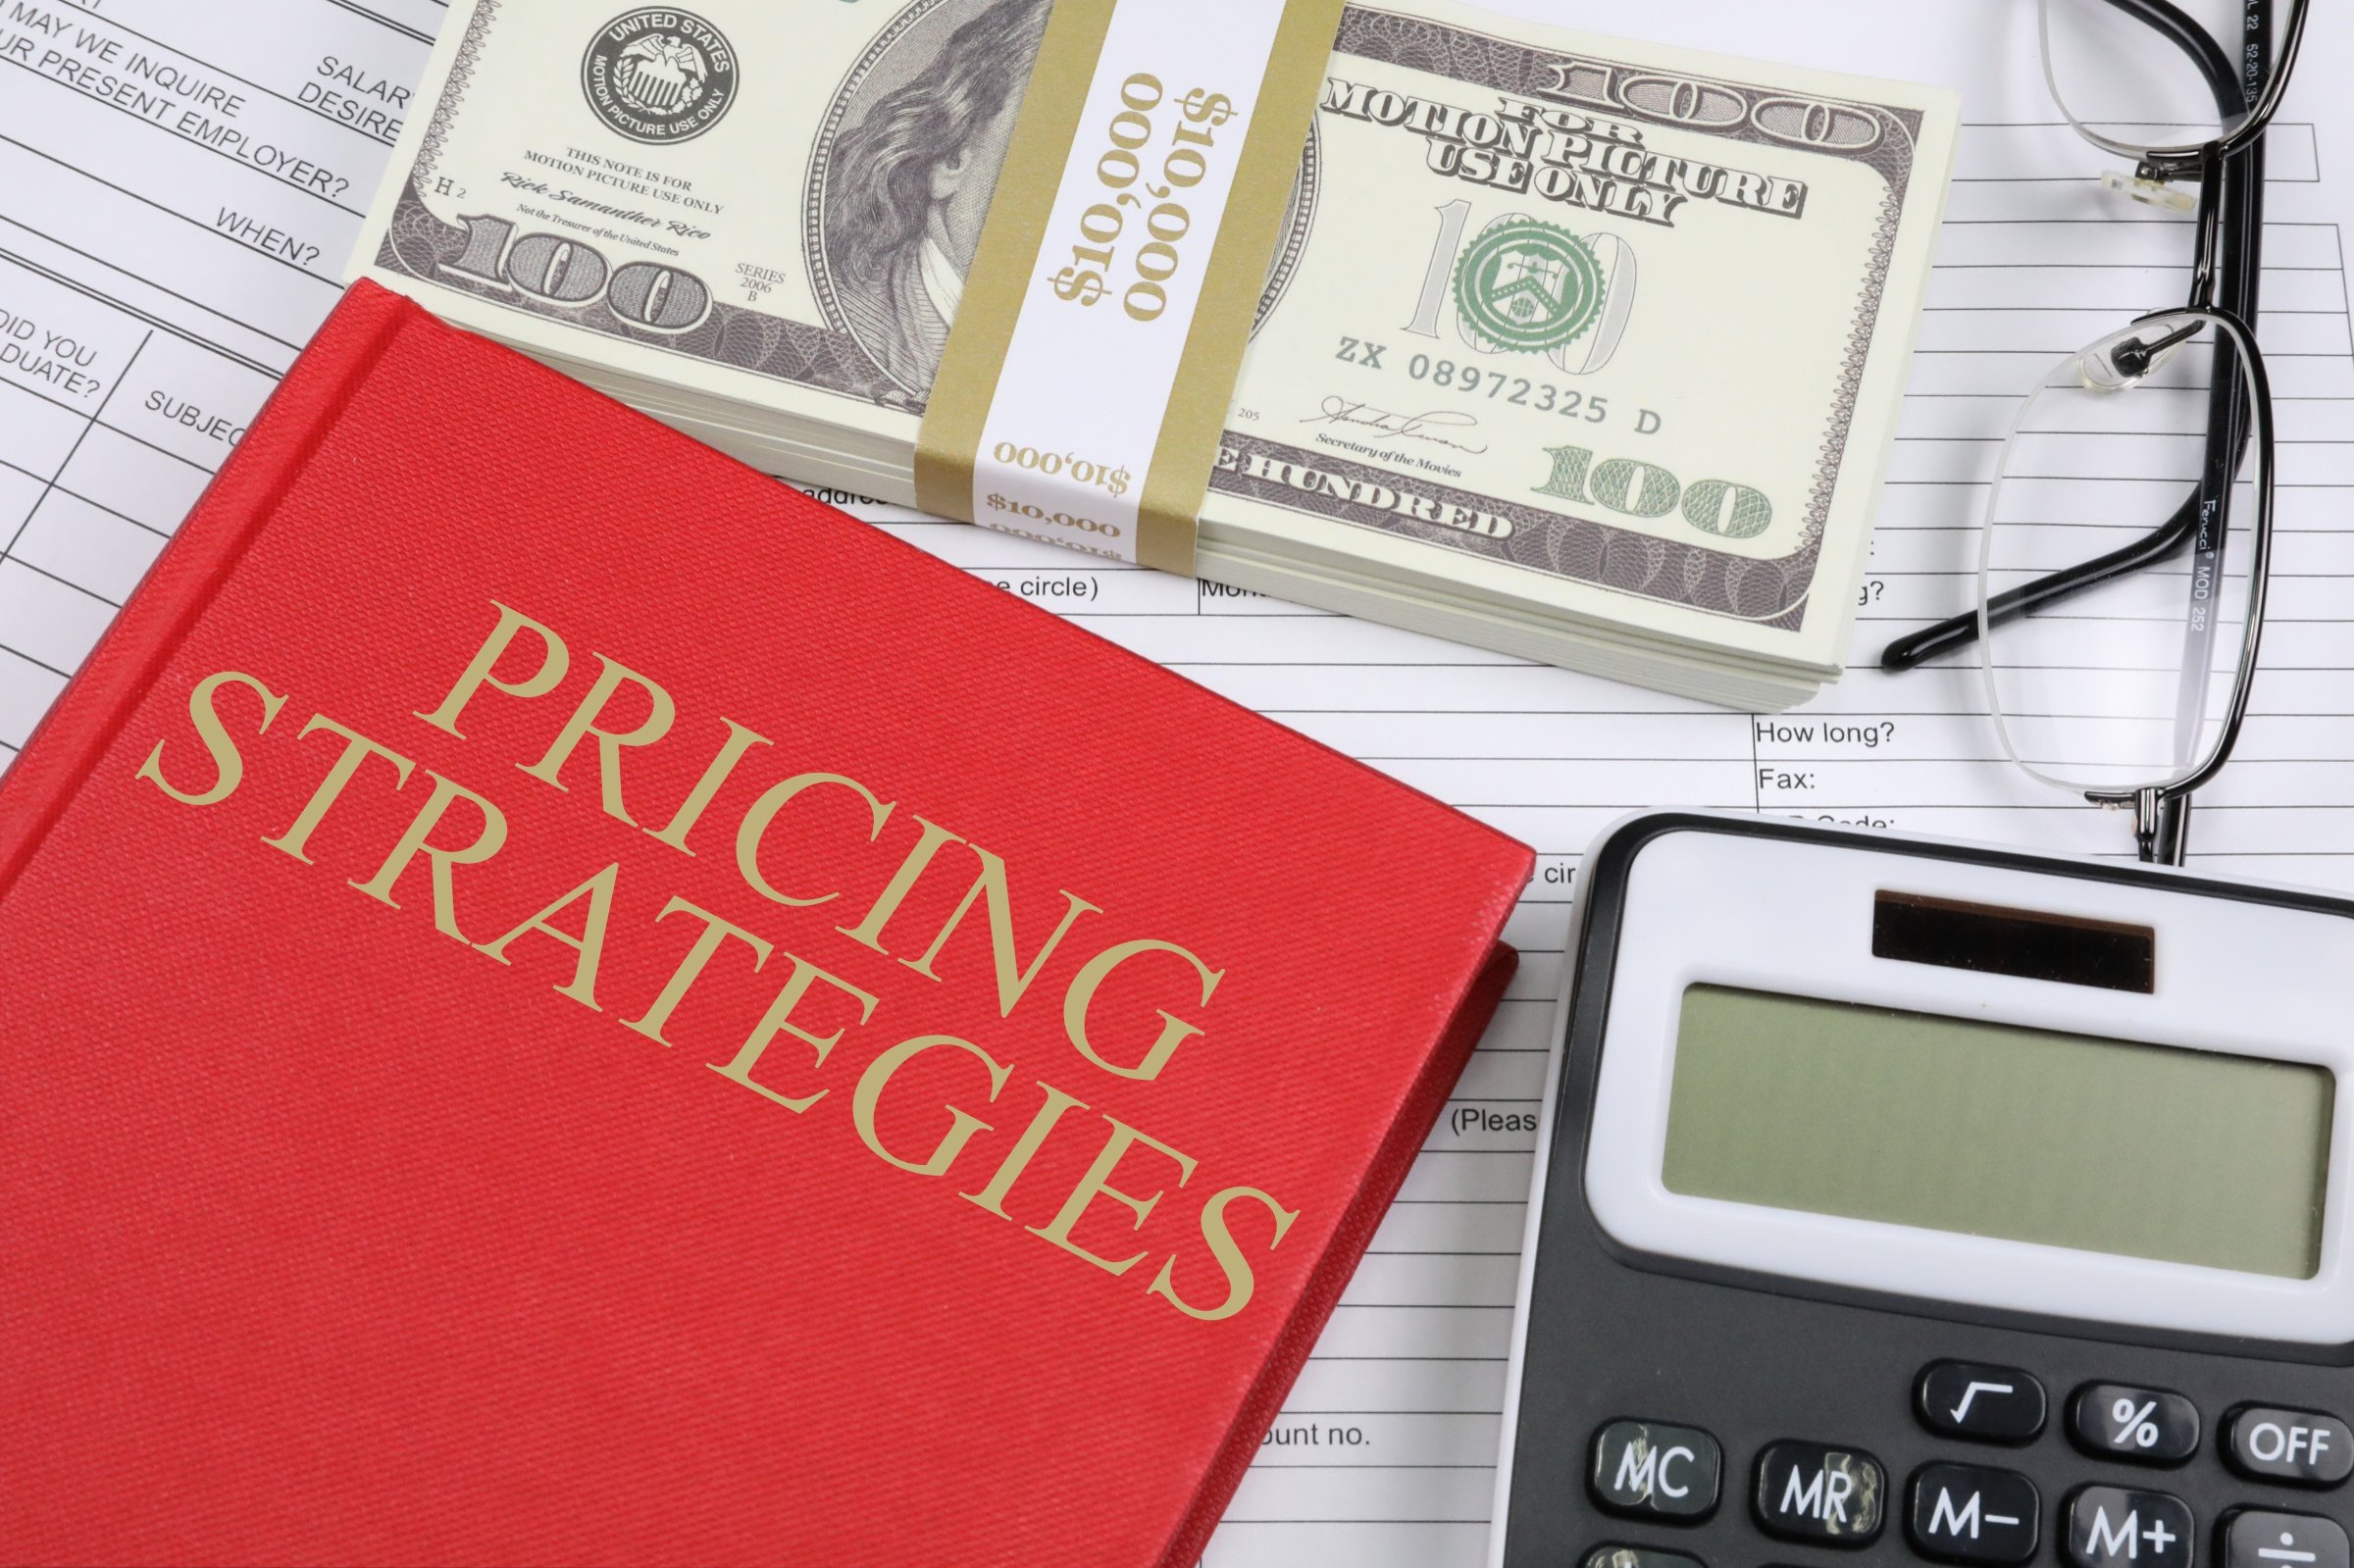 pricing strategies